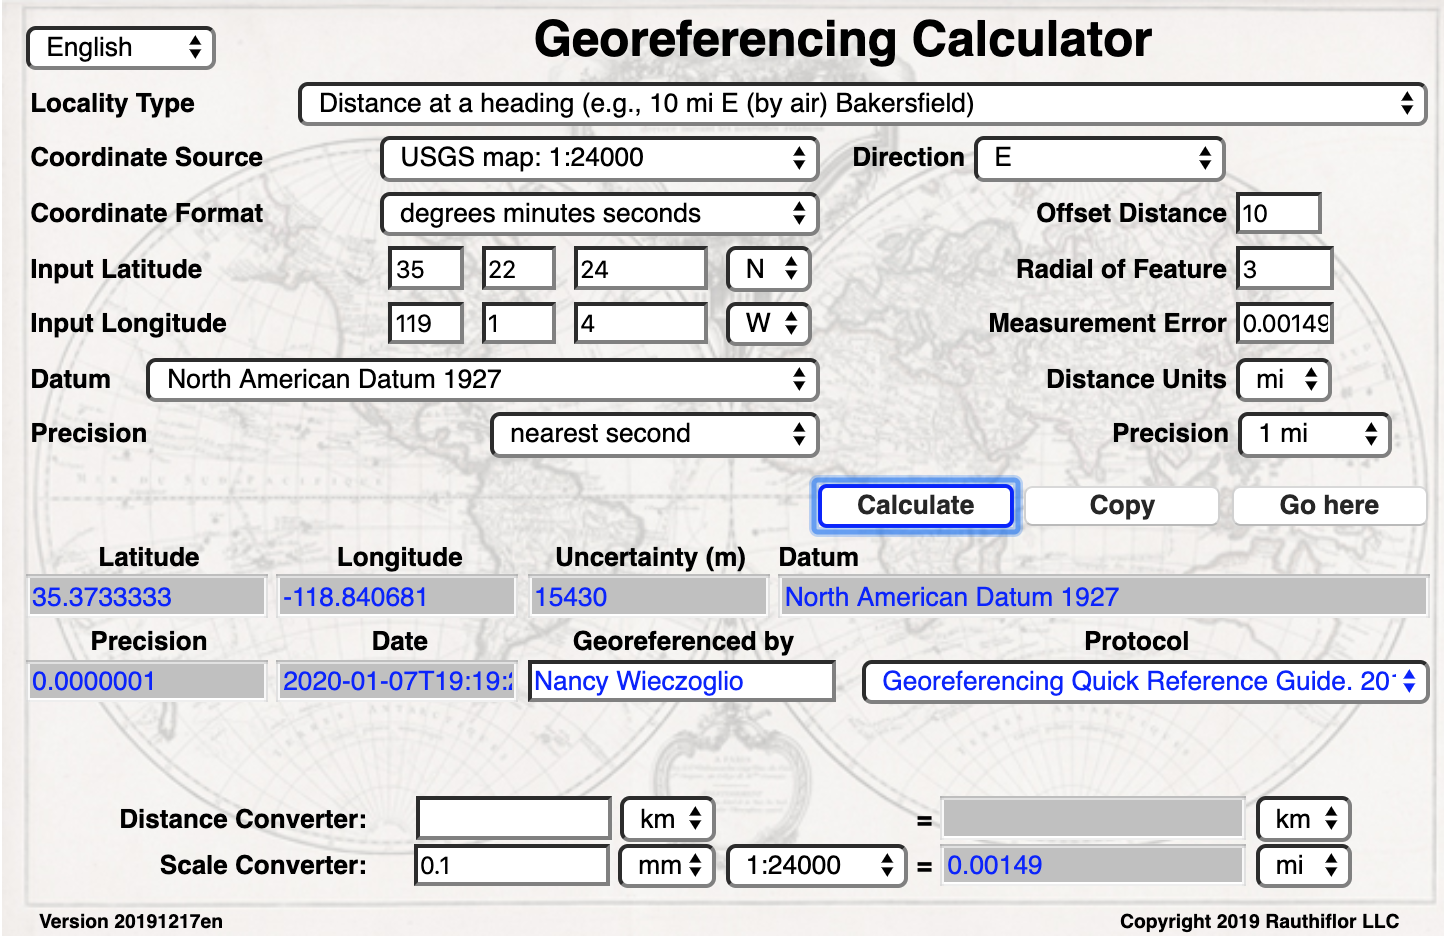 georeferencing calculator